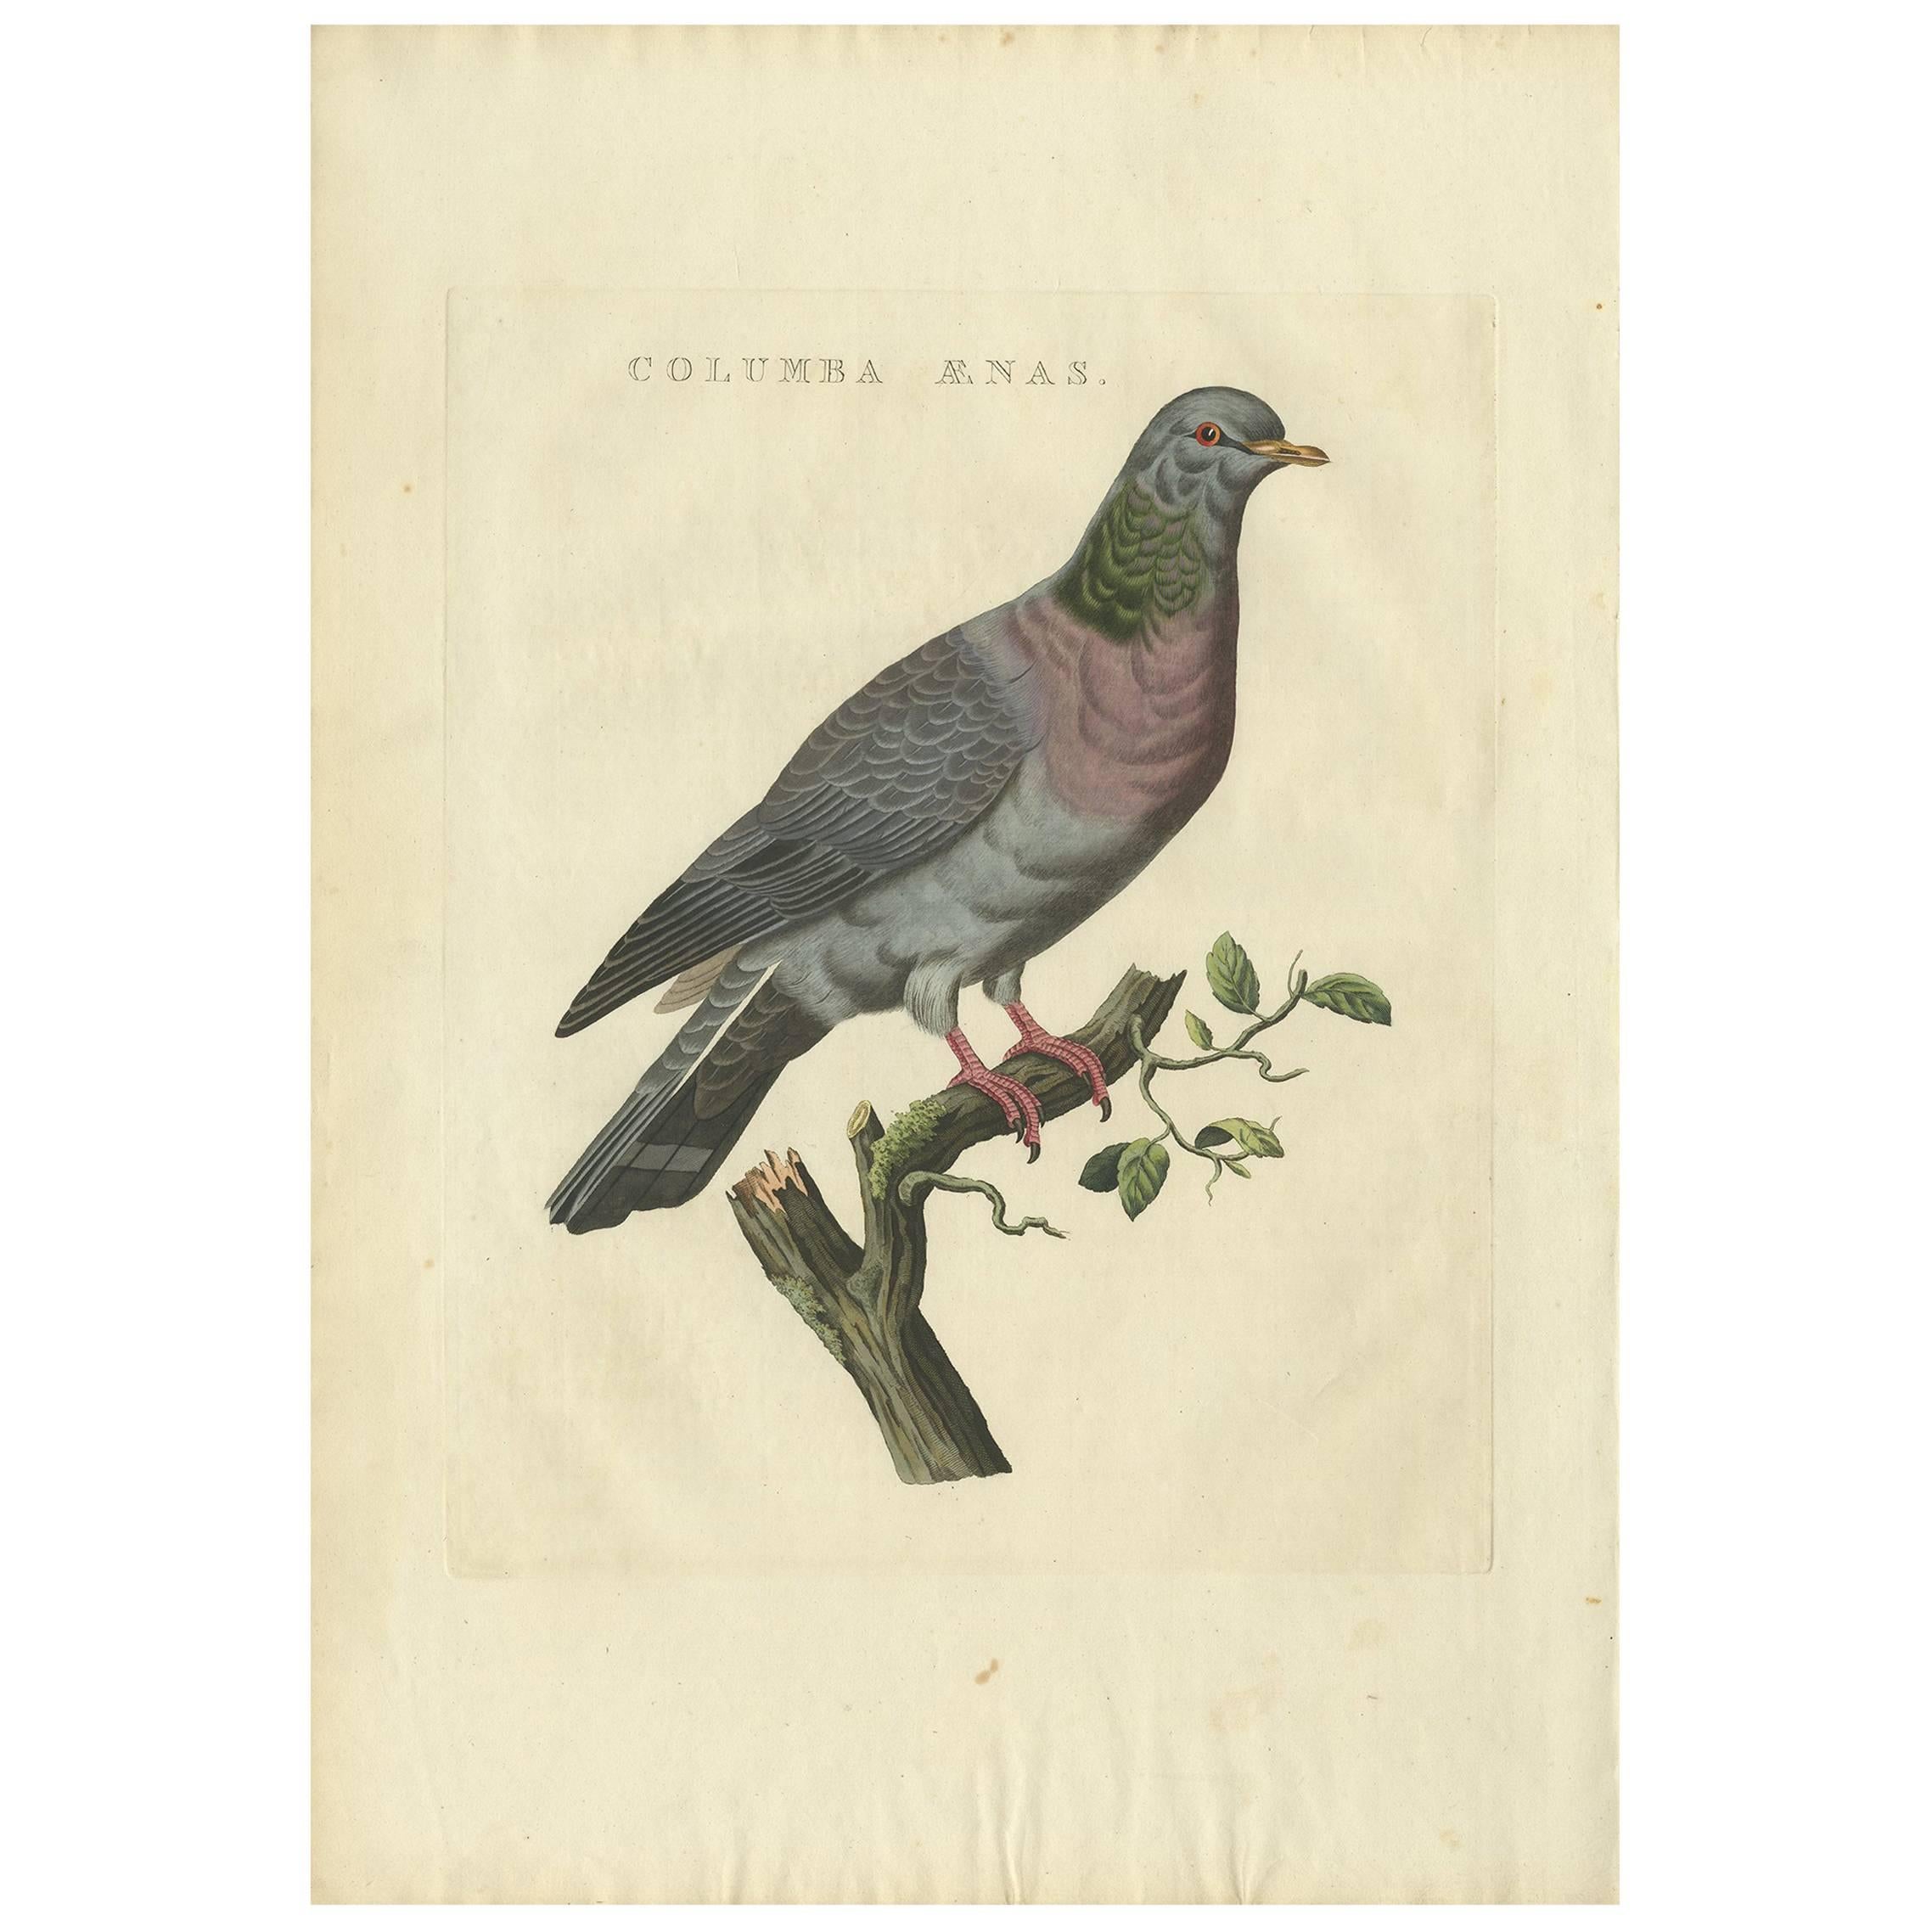 Antique Bird Print of a Stock Dove by Sepp & Nozeman, 1829